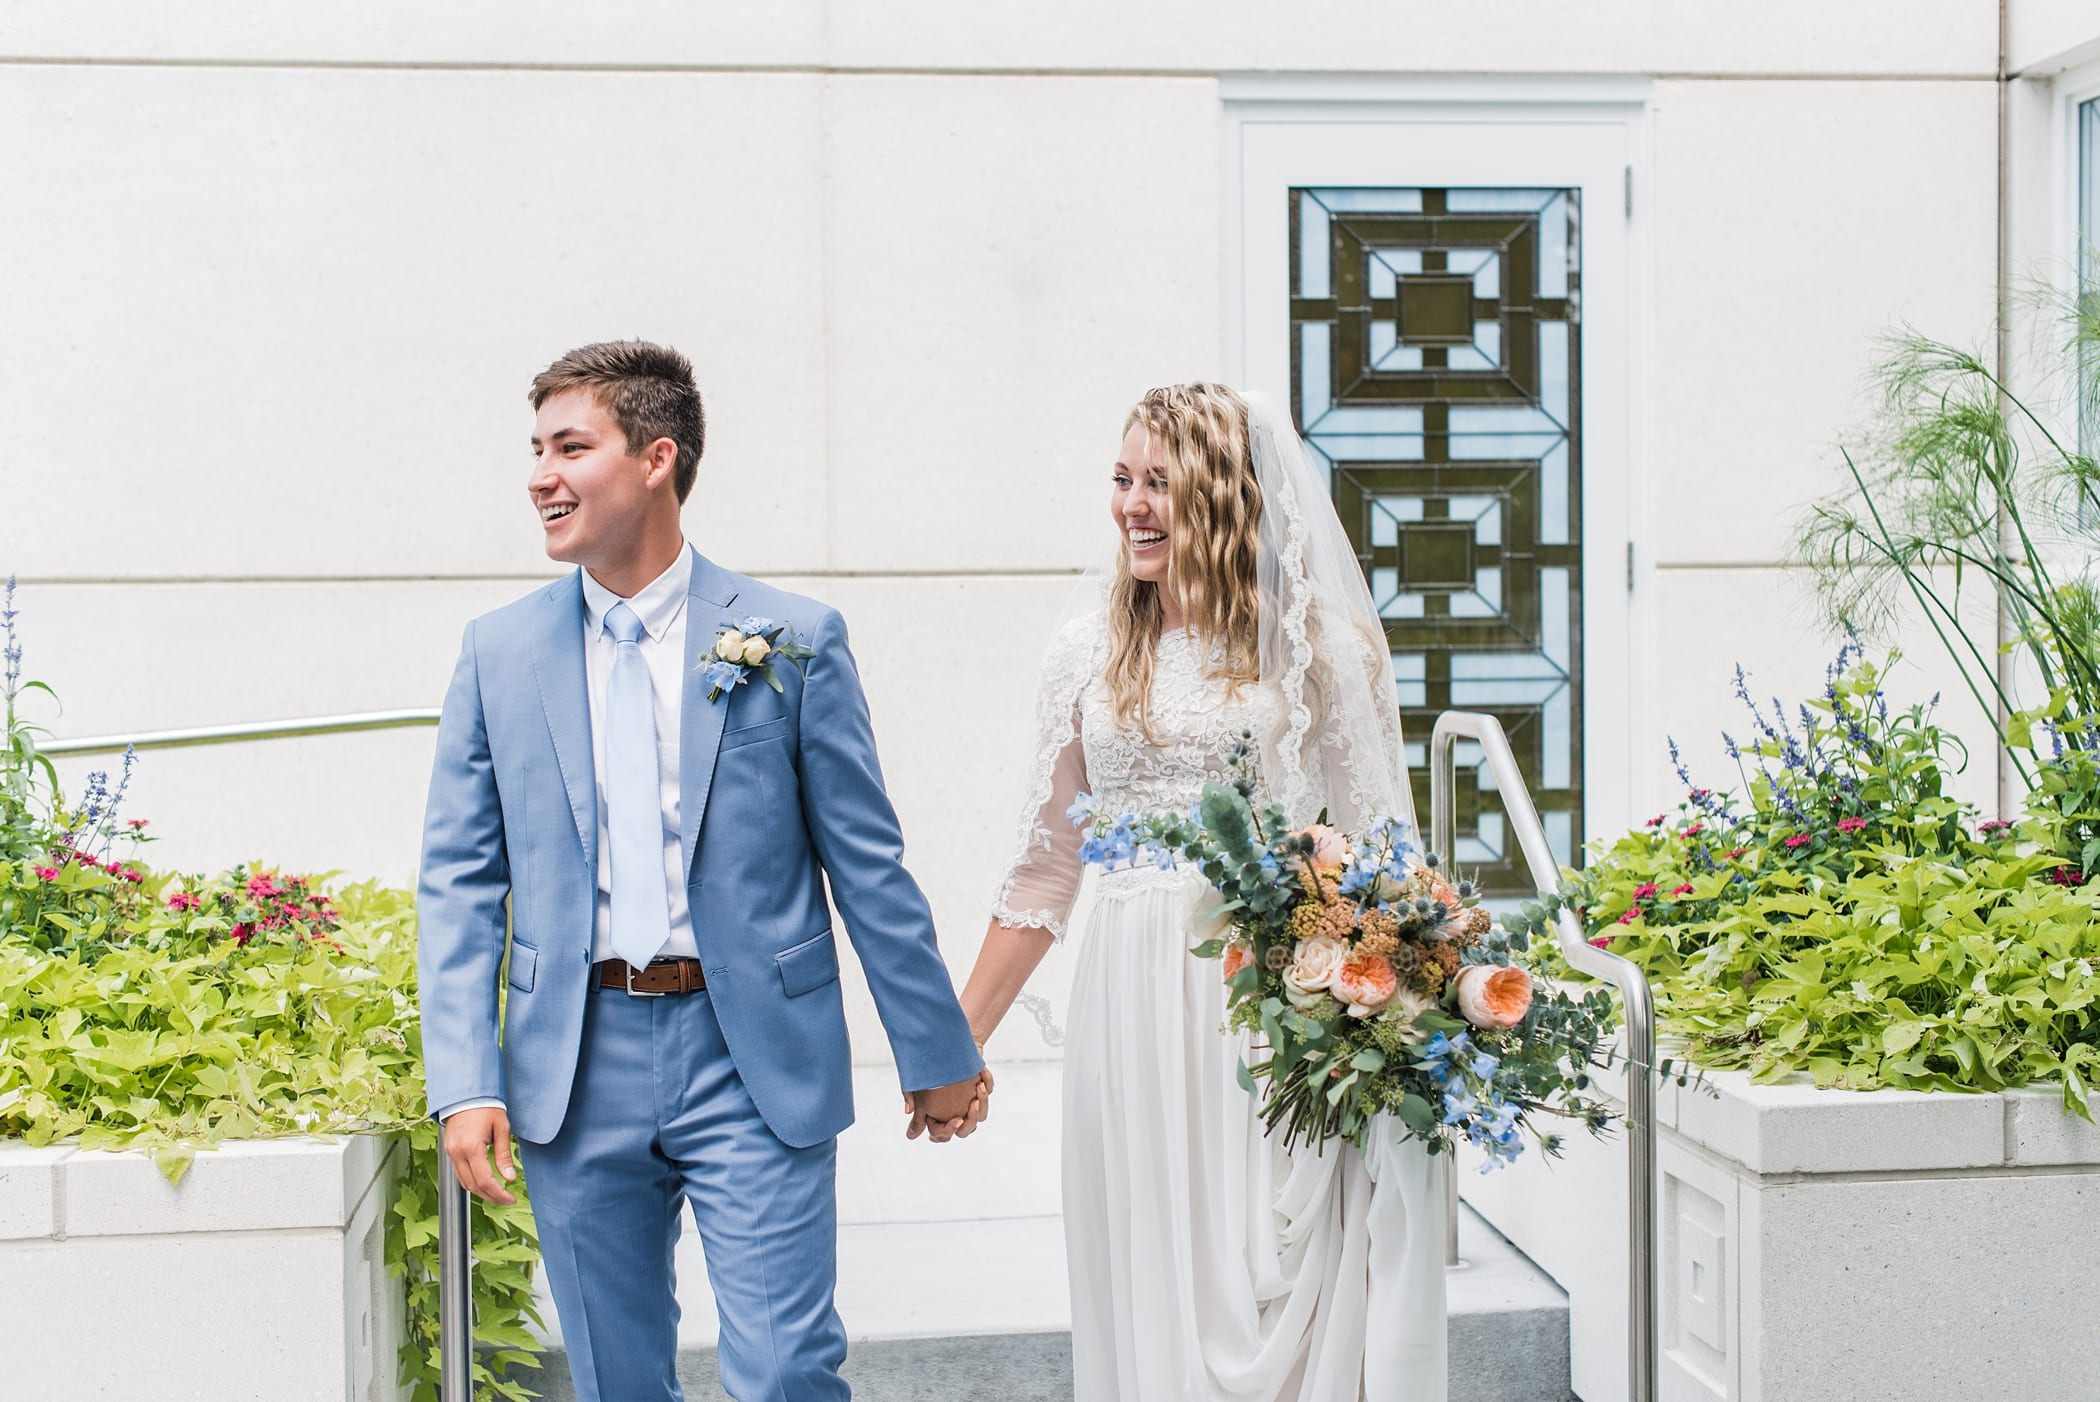 Summer Wedding | Idaho Falls LDS Temple | Dusty Blue and peach wedding | Michelle & Logan Photo & Films 